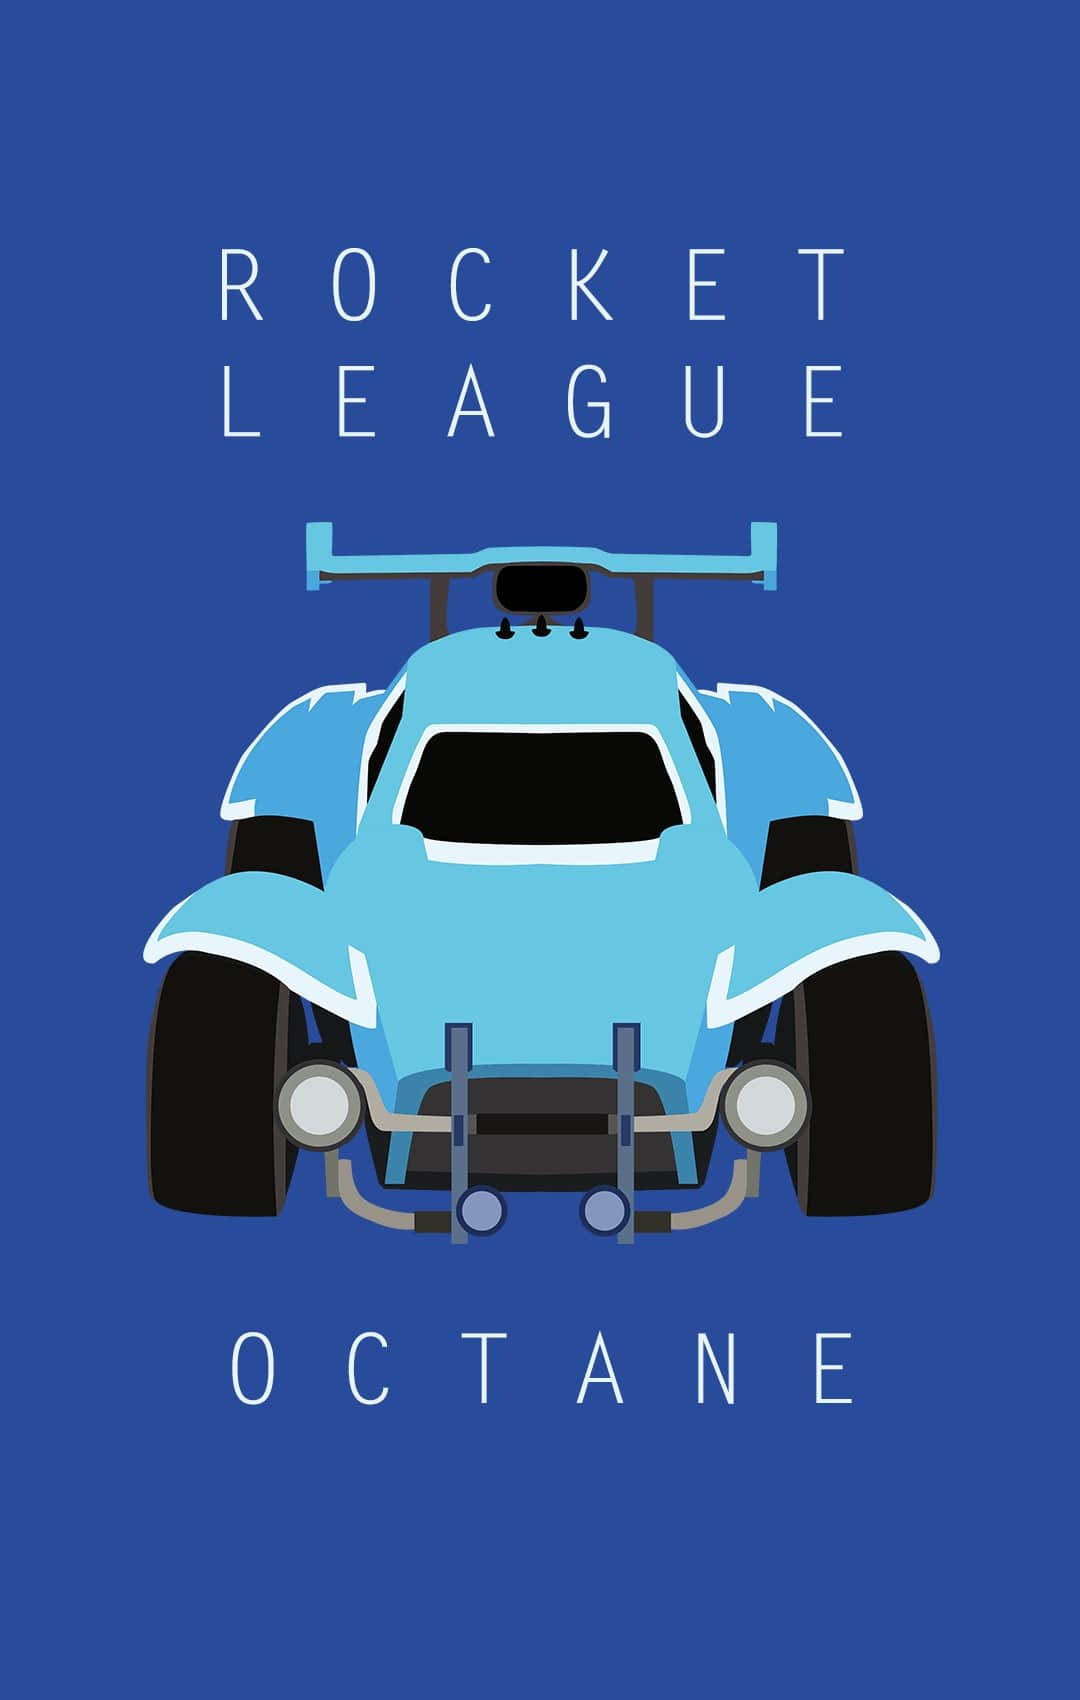 Cool Rocket League Octane Car Wallpaper